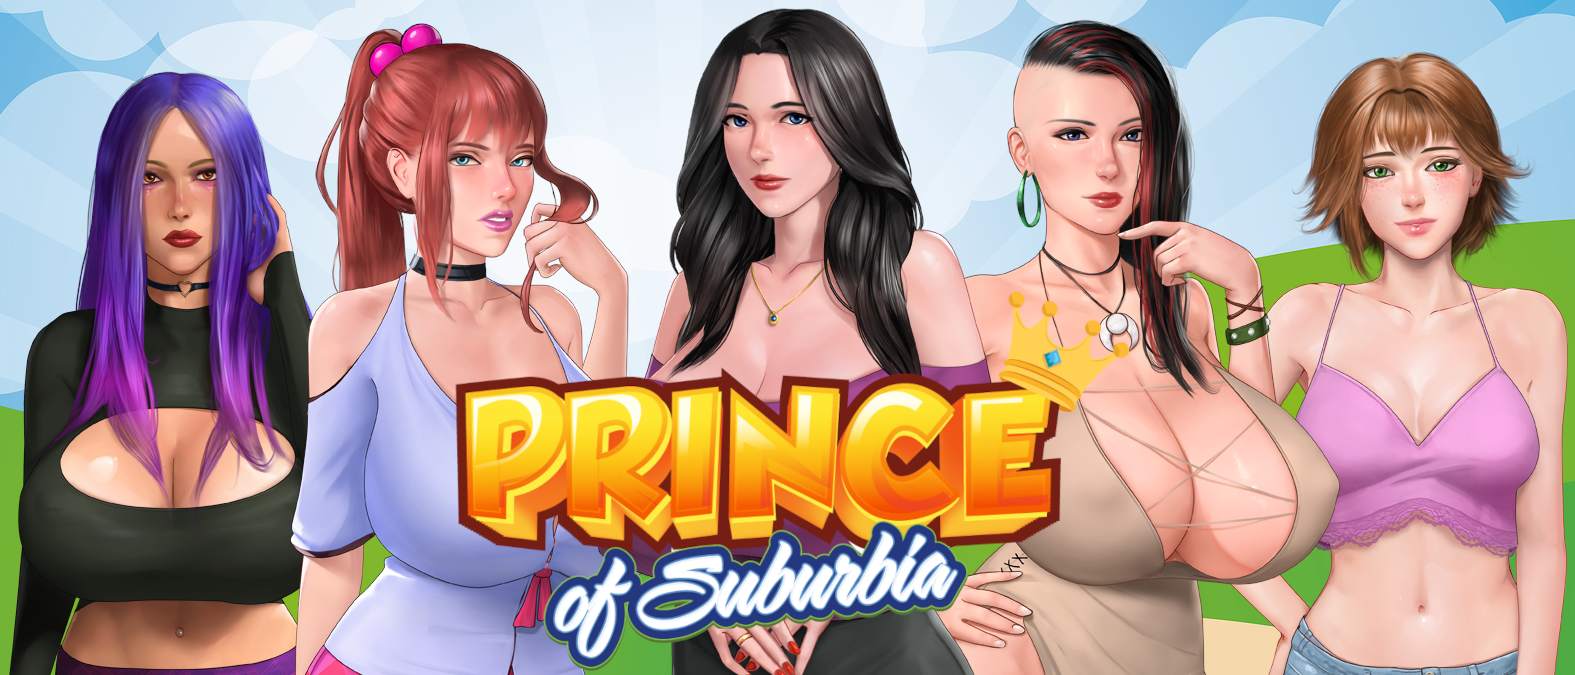 Prince of Suburbia [ViM Studios] Adult xxx Game Download